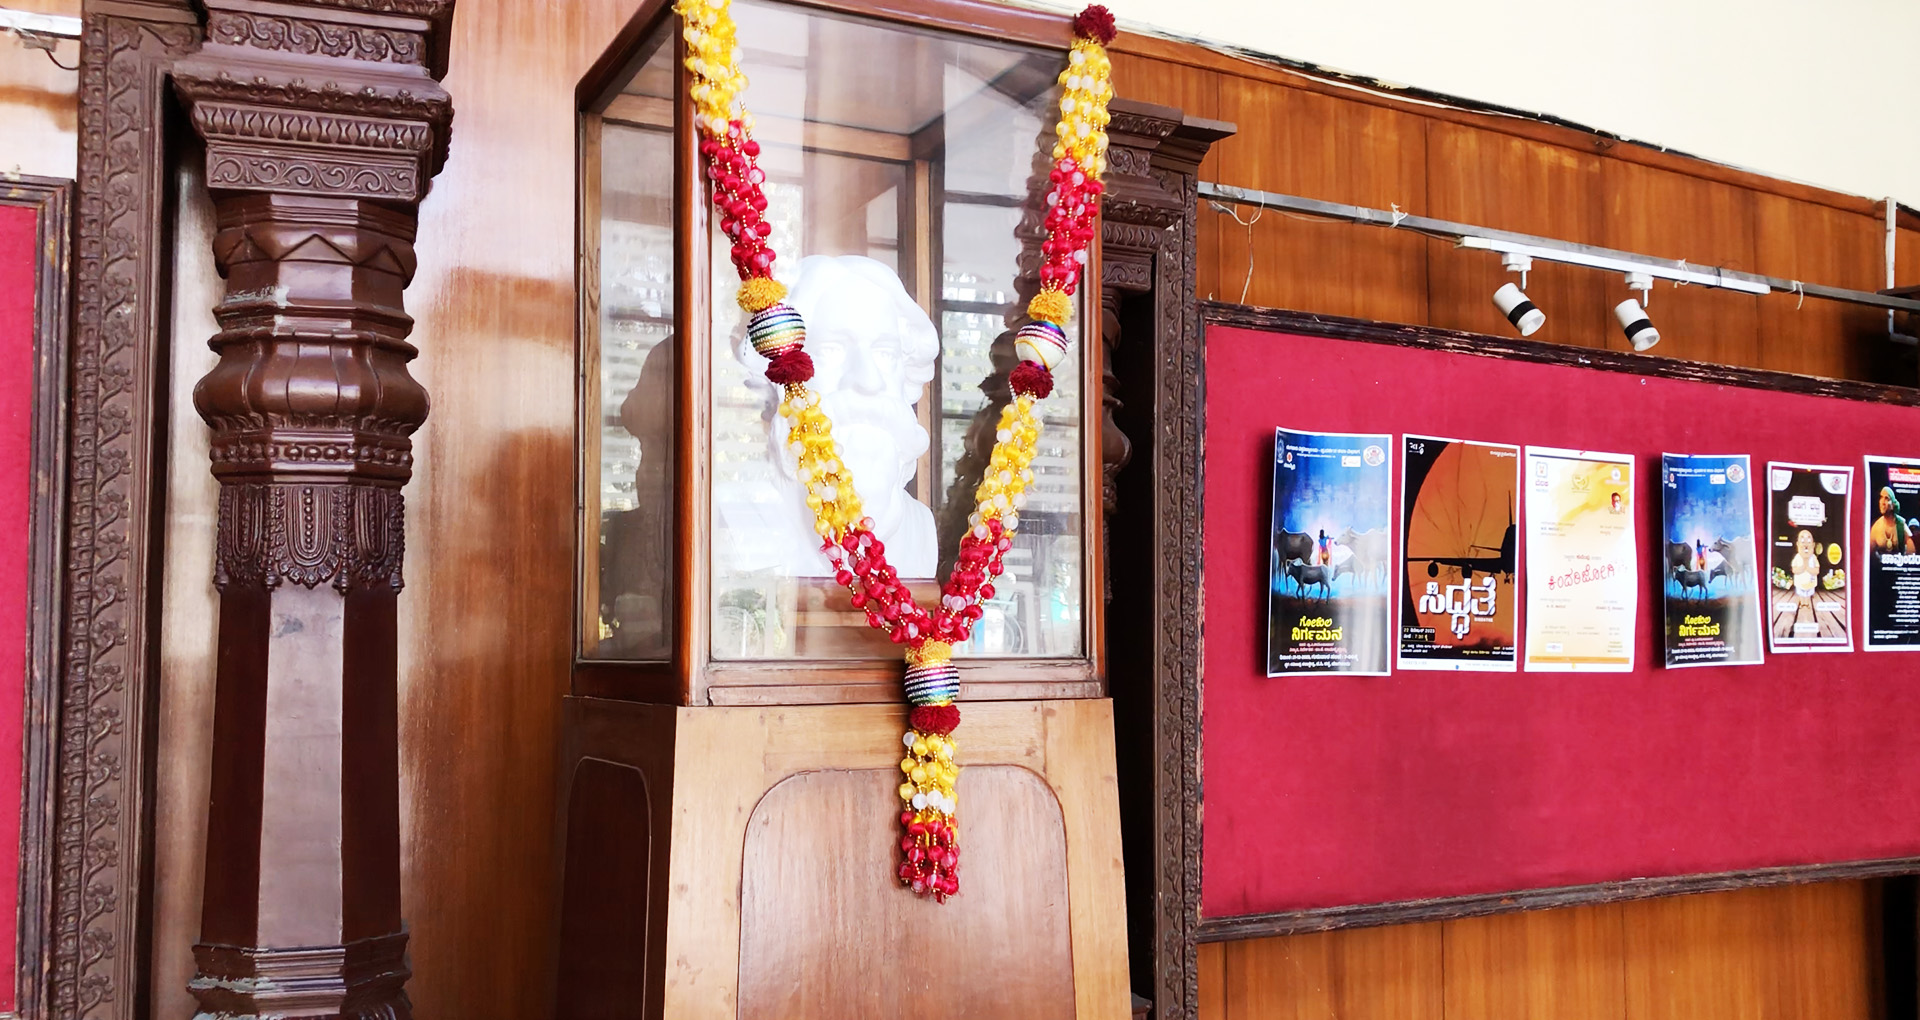  A statue of Rabindranath Tagore sits in a glass showcase at Kalakshetra. Photo: Keerthik CS